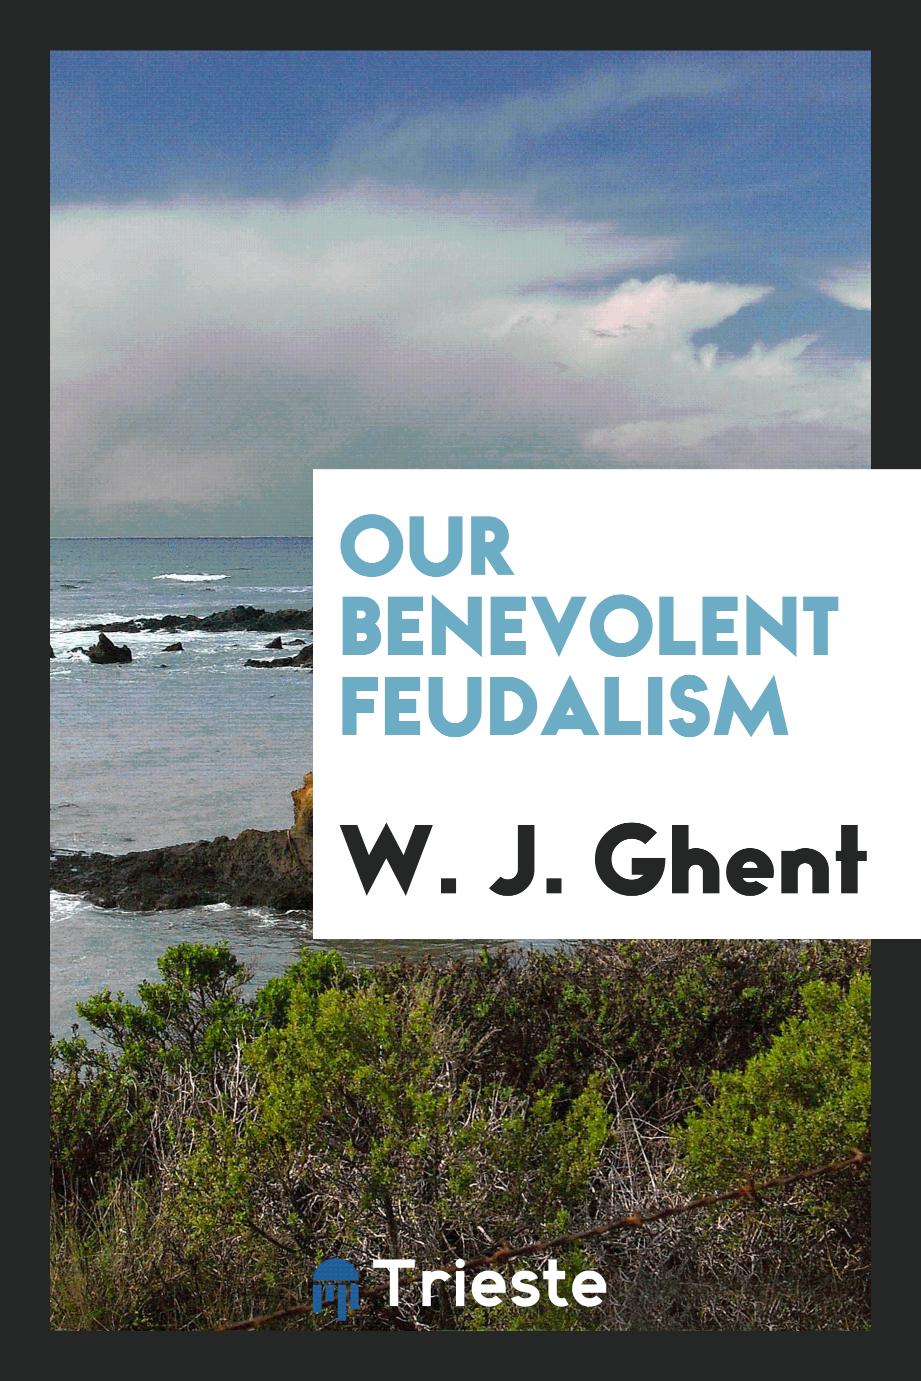 Our benevolent feudalism